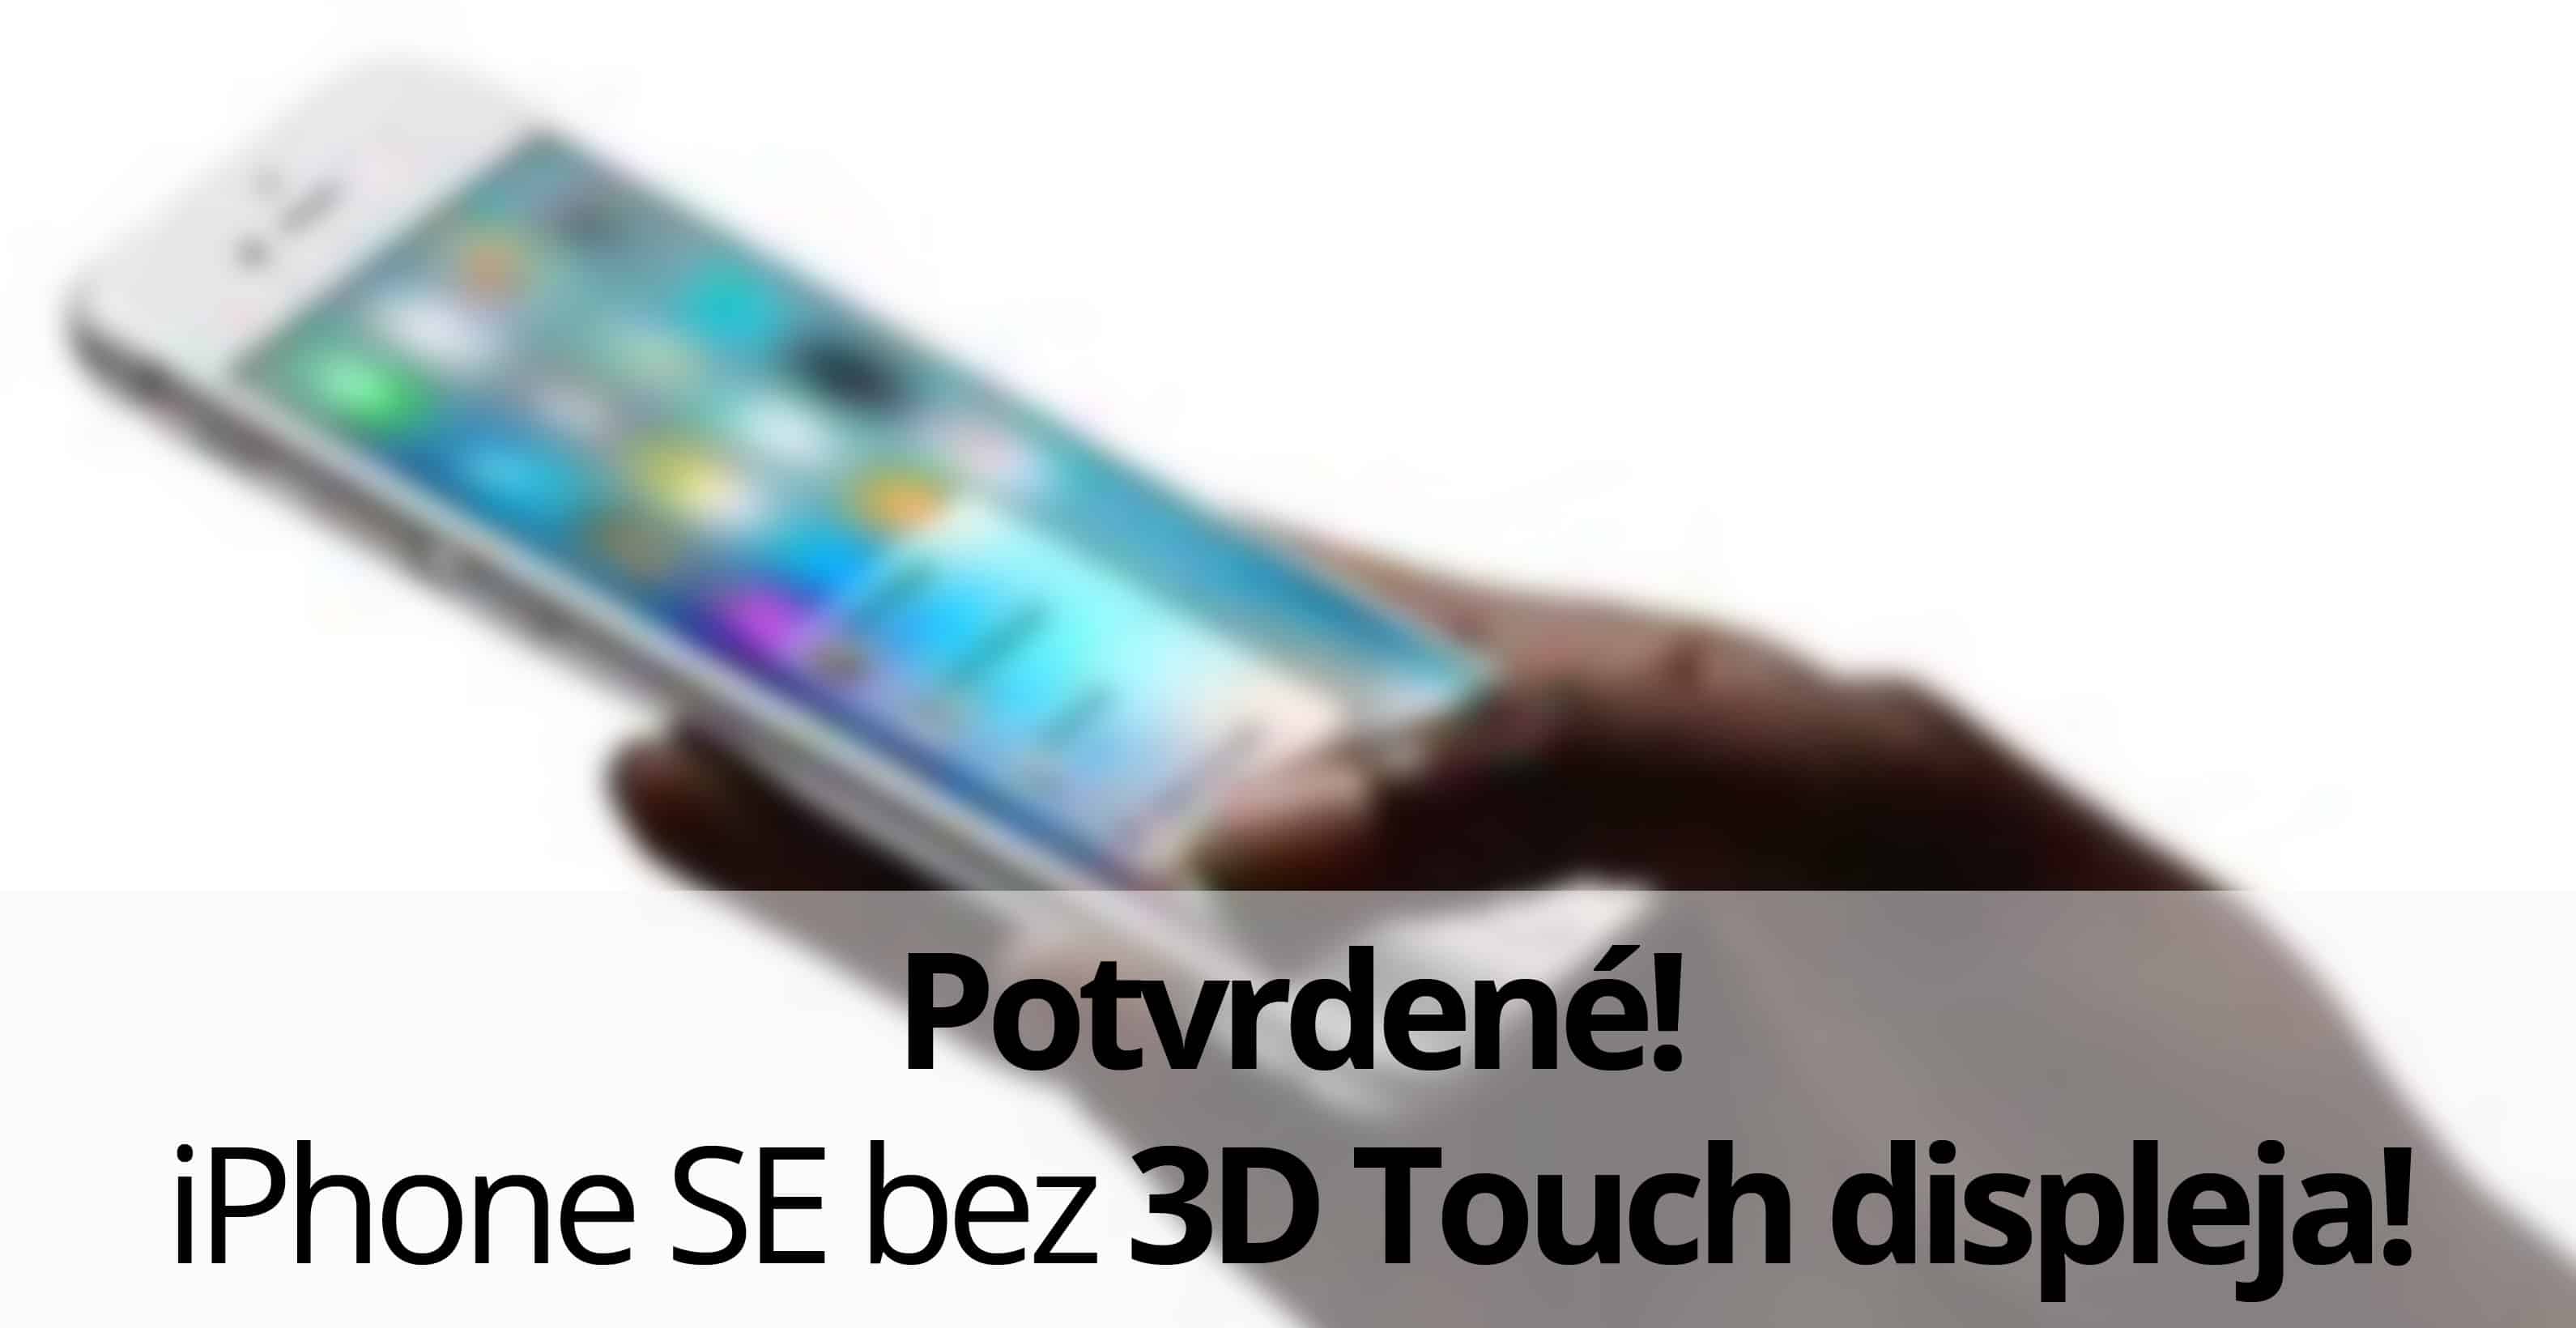 Potvrdené! iPhone SE bez 3D Touch displeja!